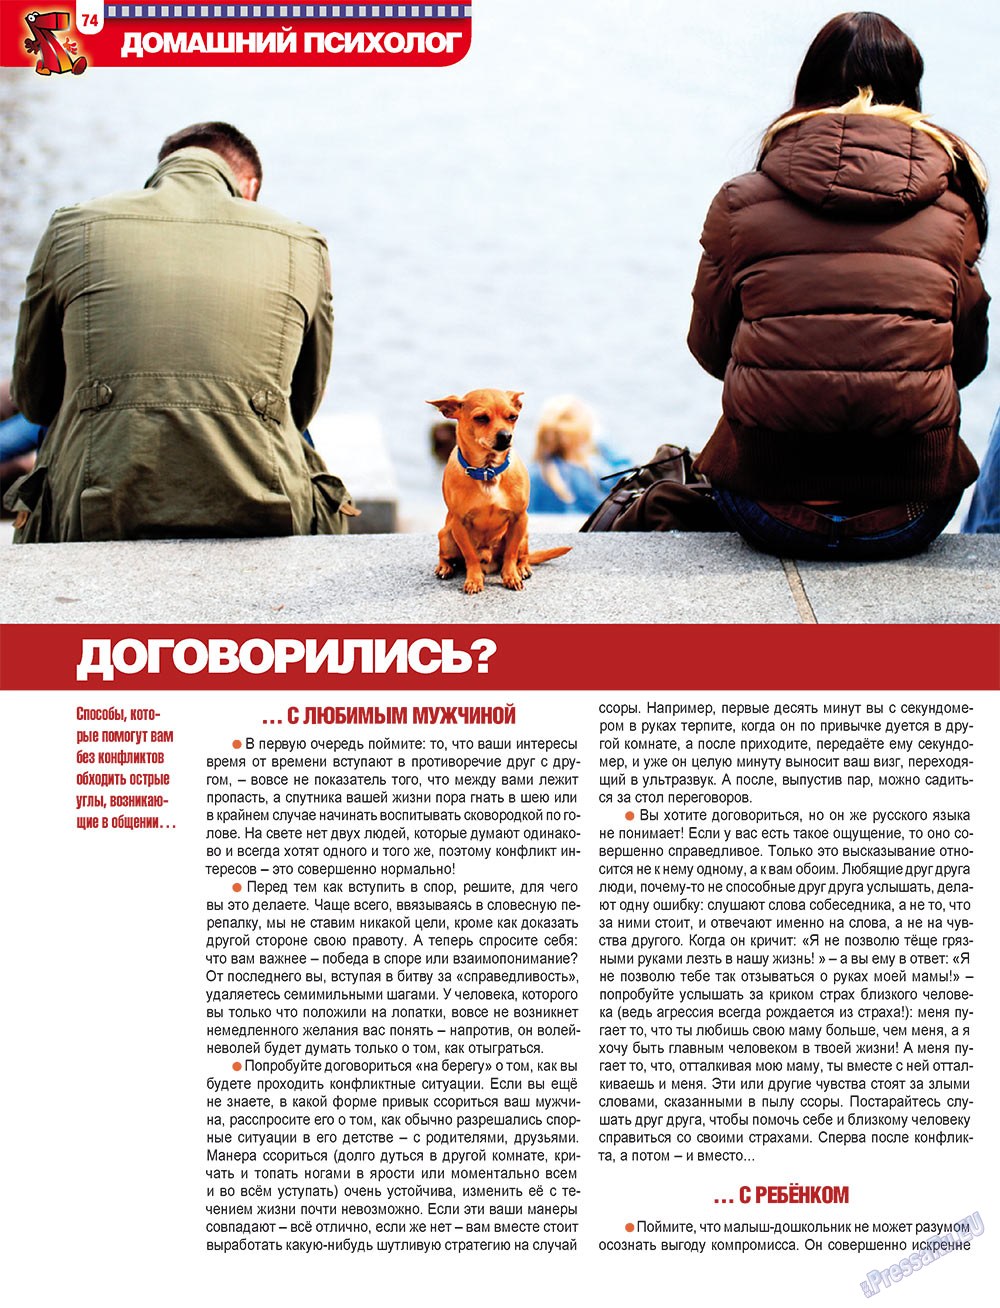 7плюс7я (журнал). 2011 год, номер 18, стр. 74